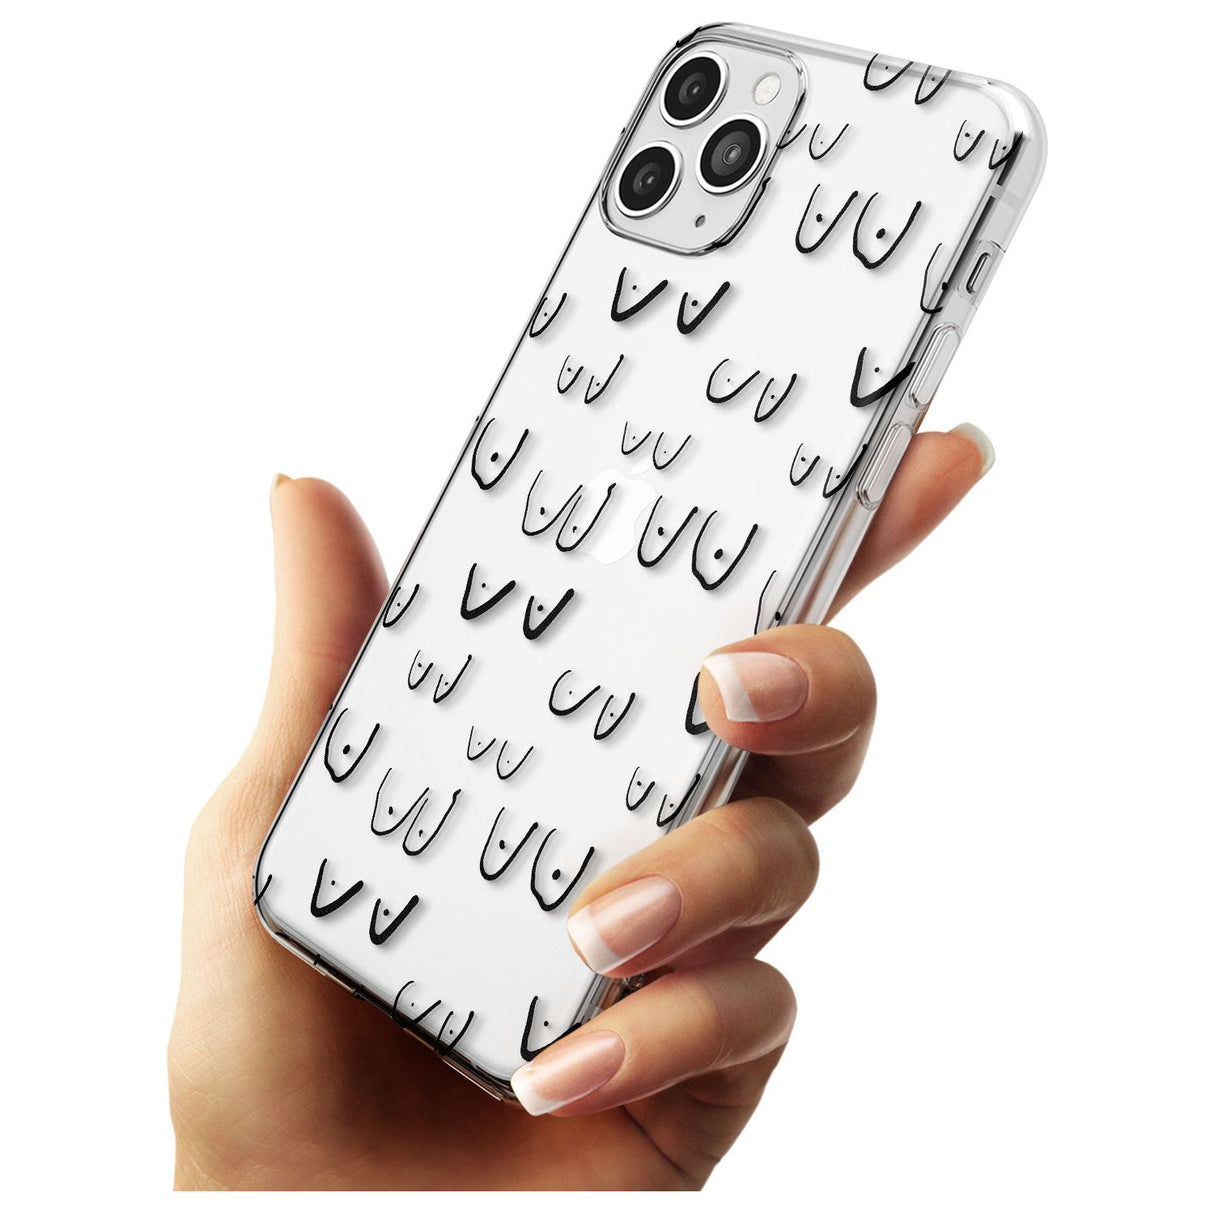 Boob Pattern (Black) Black Impact Phone Case for iPhone 11 Pro Max